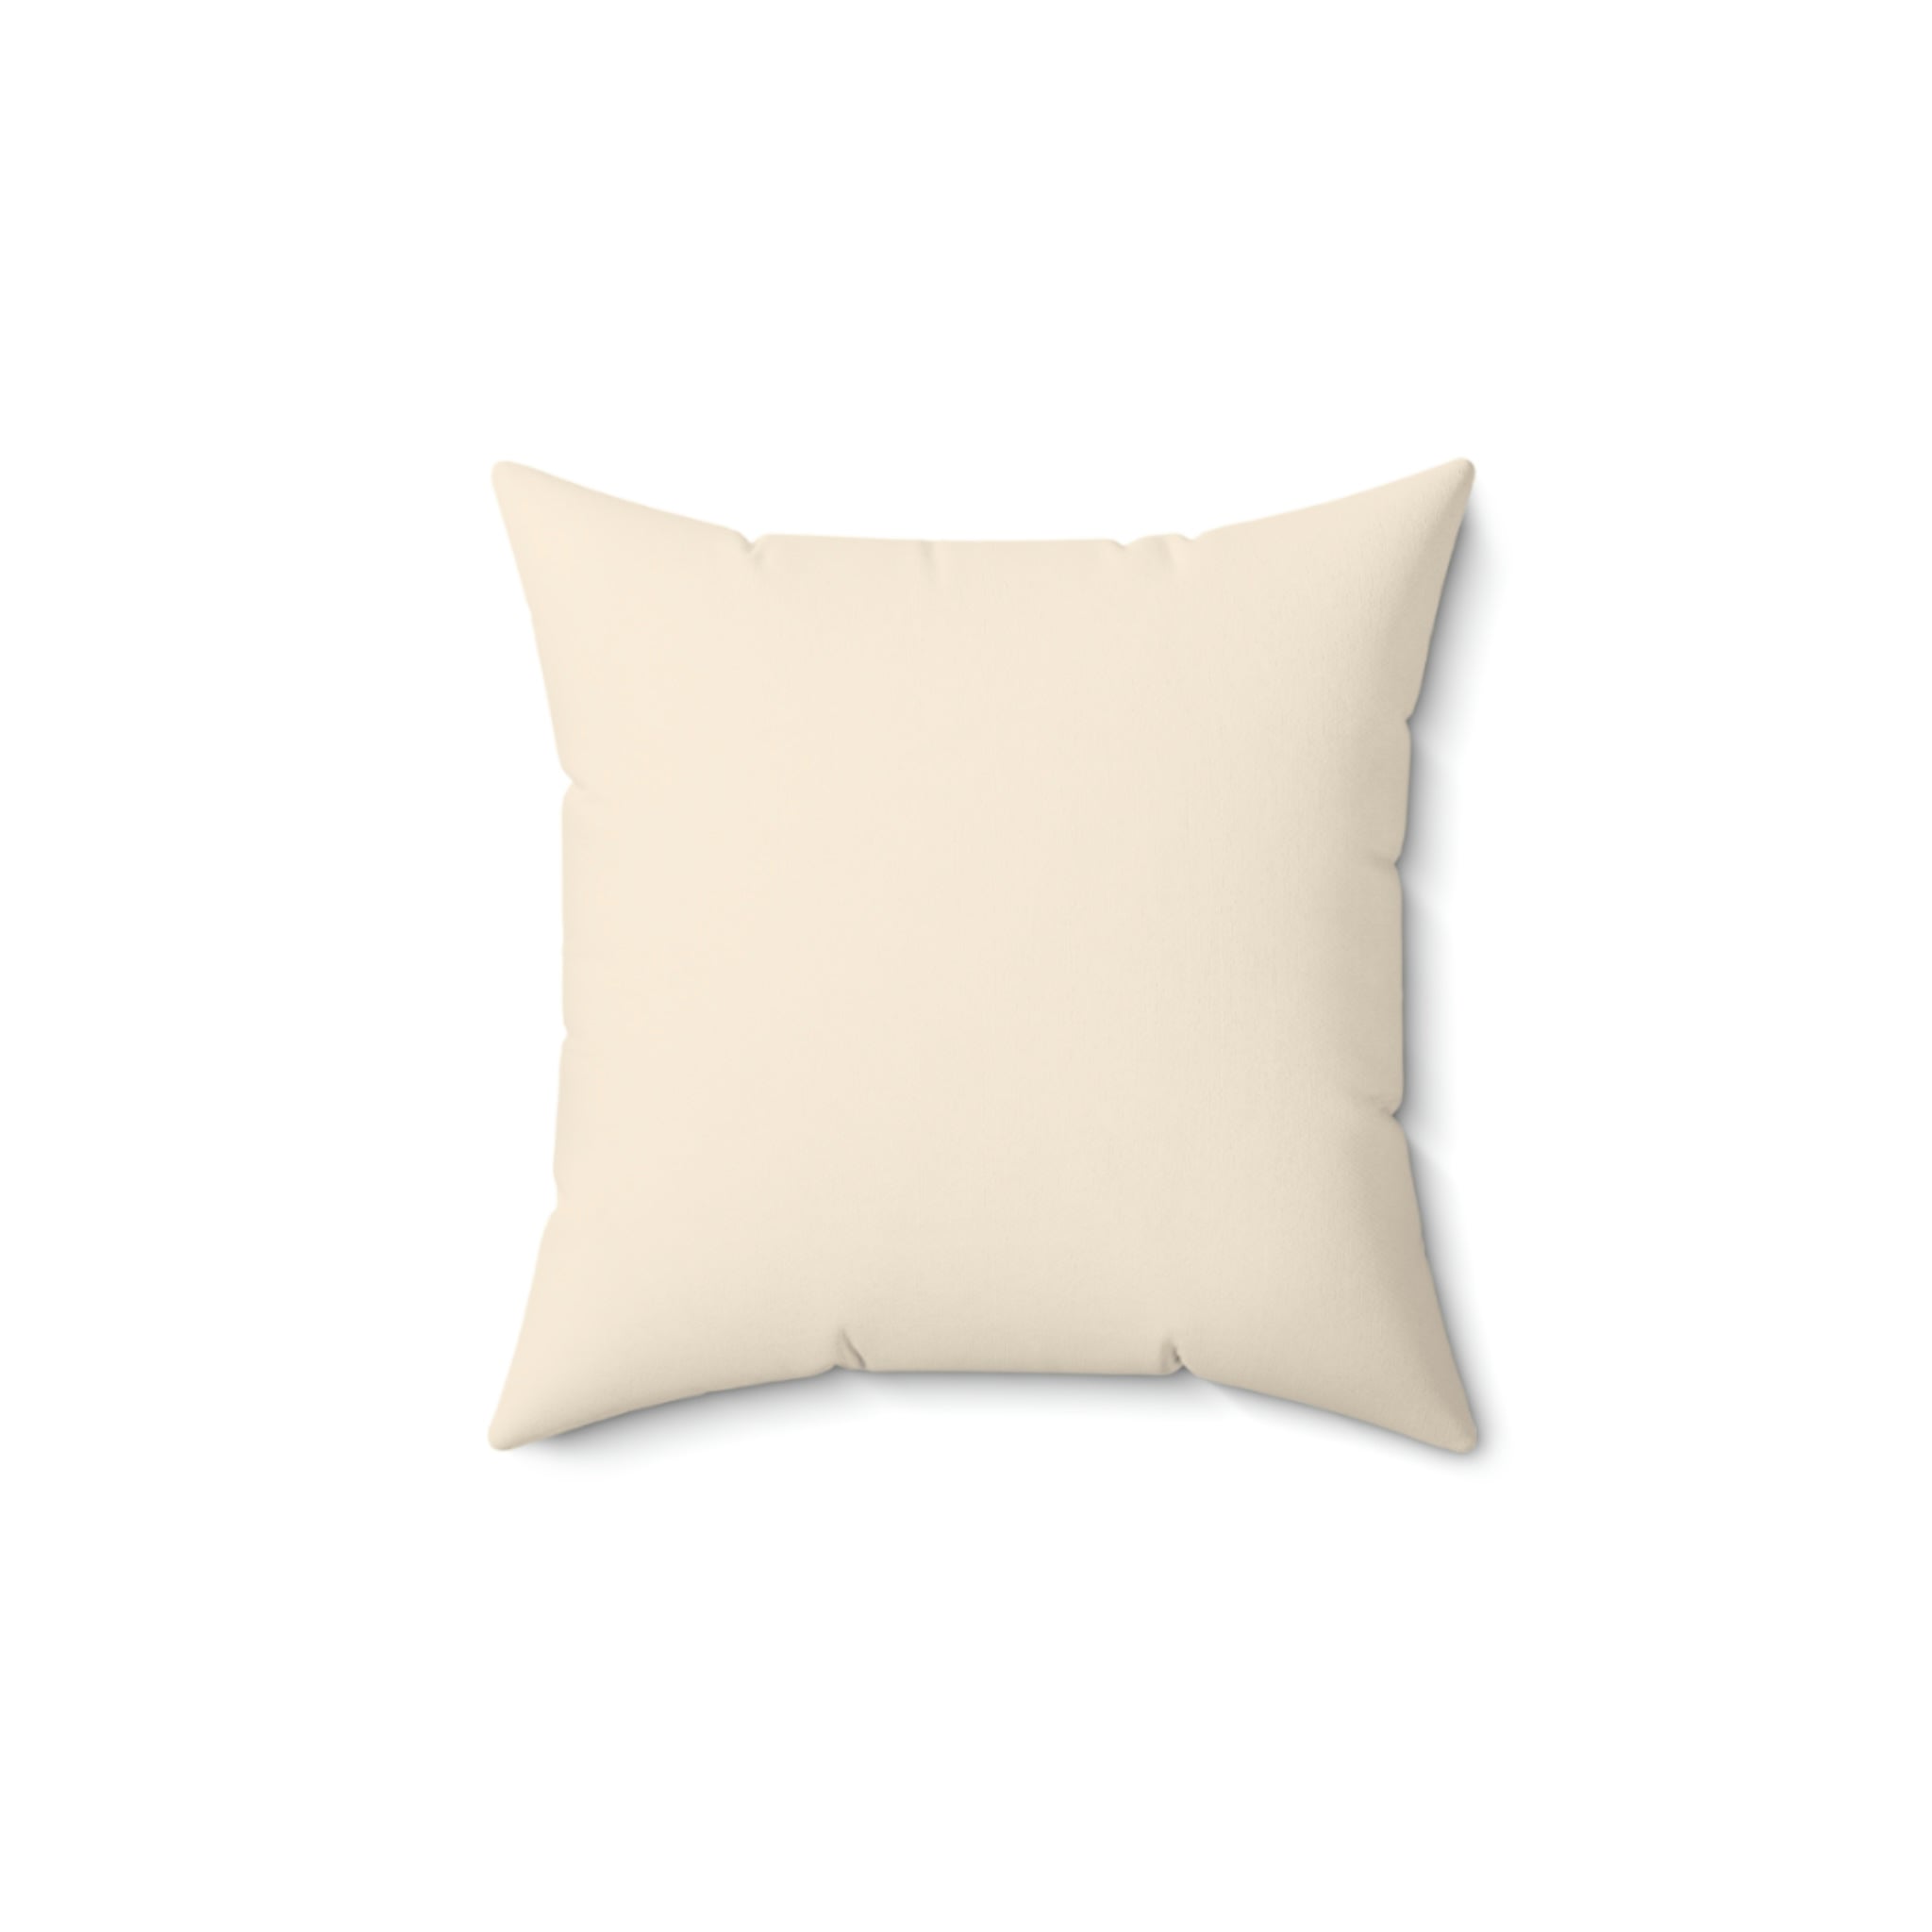 Love Spun Polyester Pillow Heart layer off white pattern